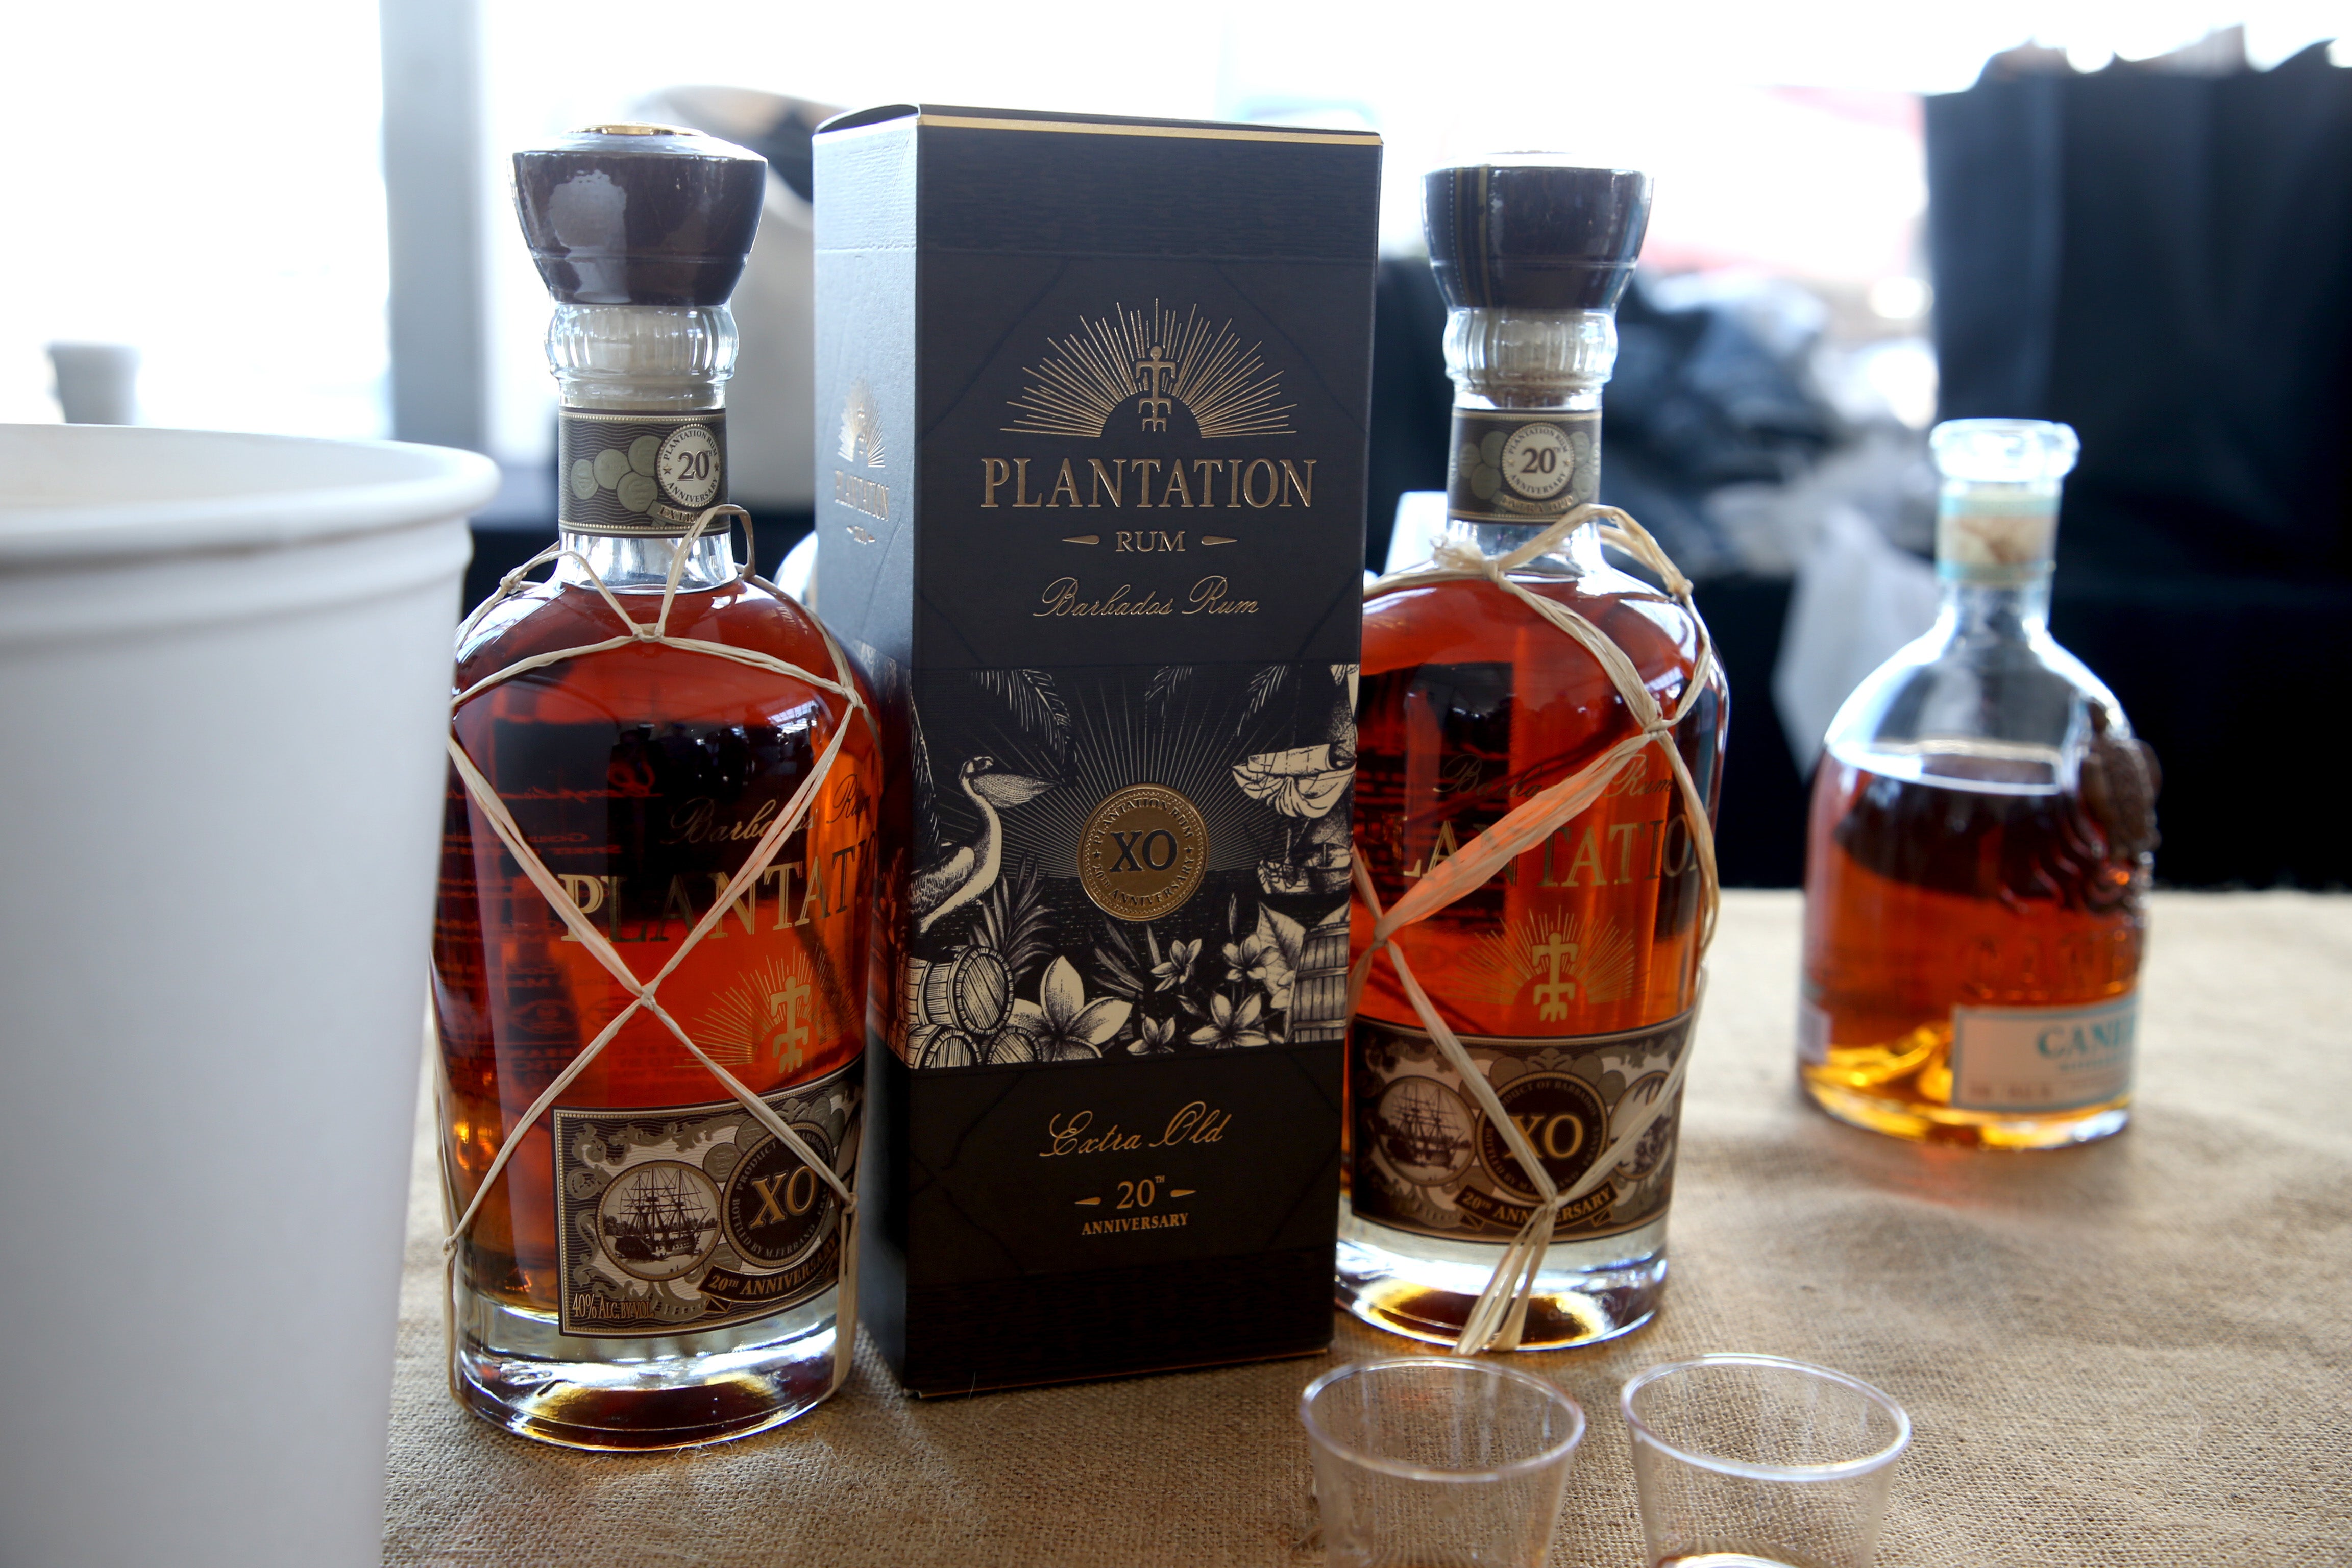 Plantation rum has been renamed Planteray rum